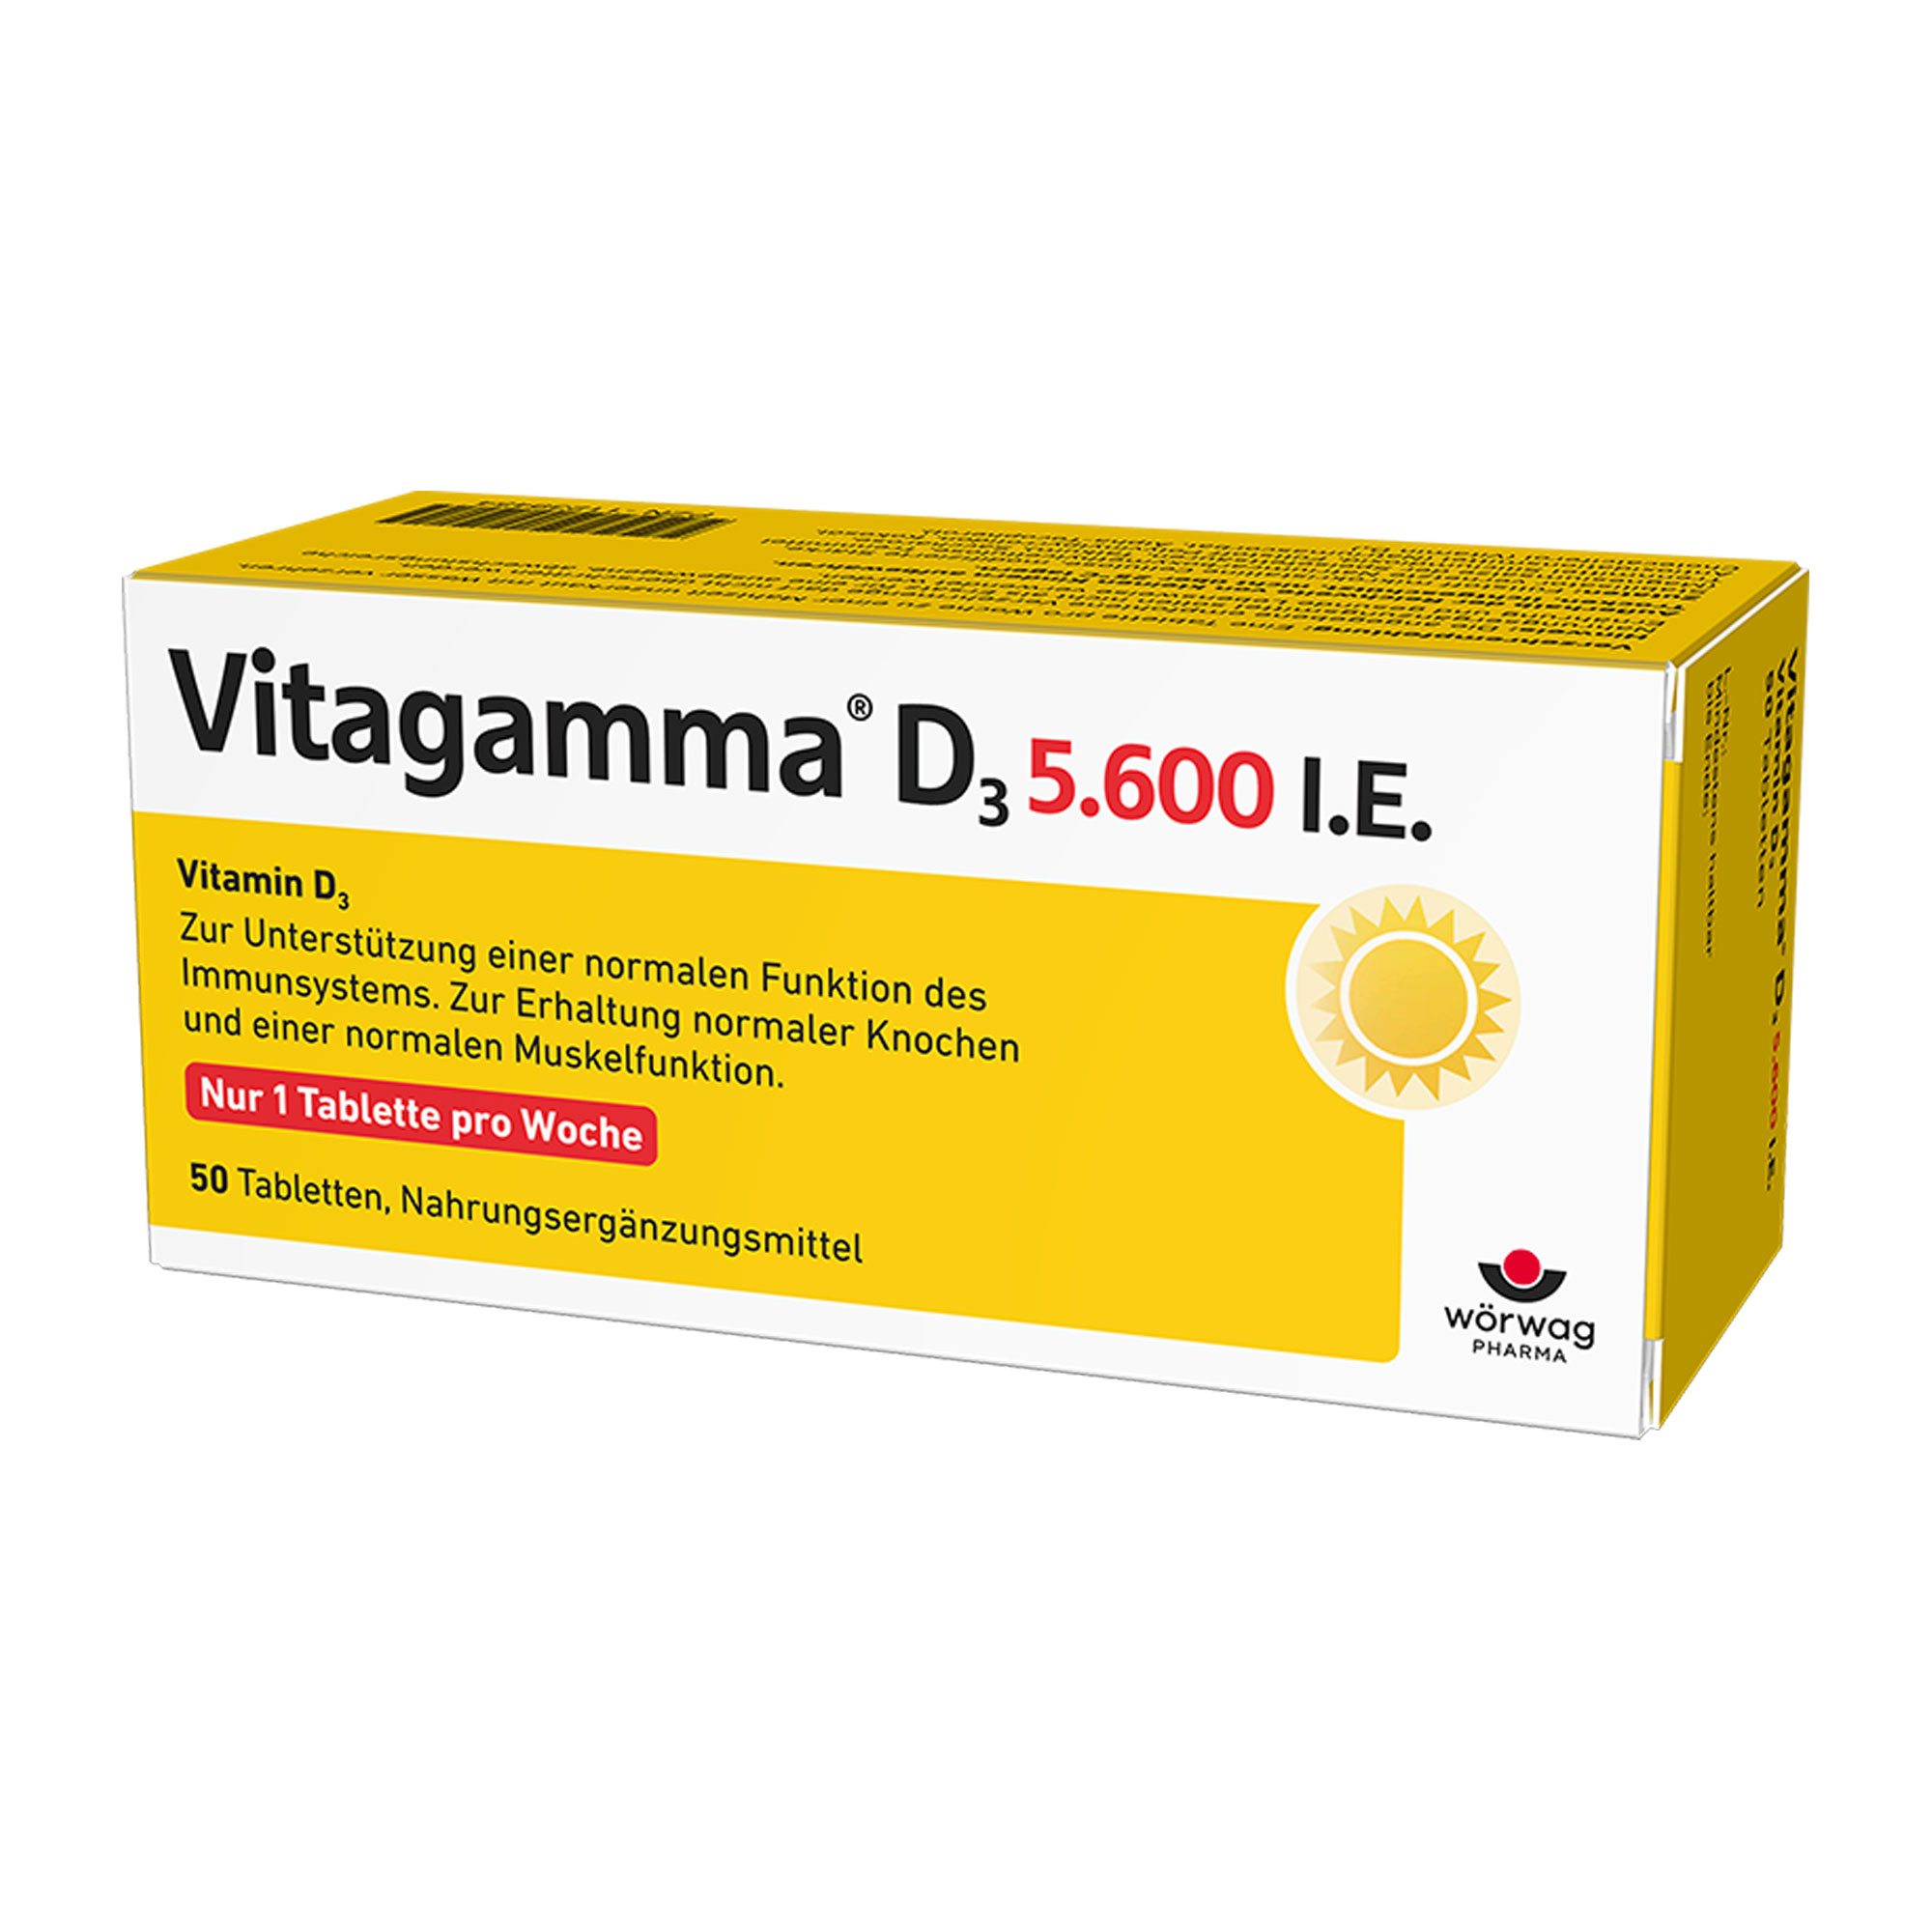 Nahrungsergänzungsmittel mit Vitamin D3 5.600 I.E.